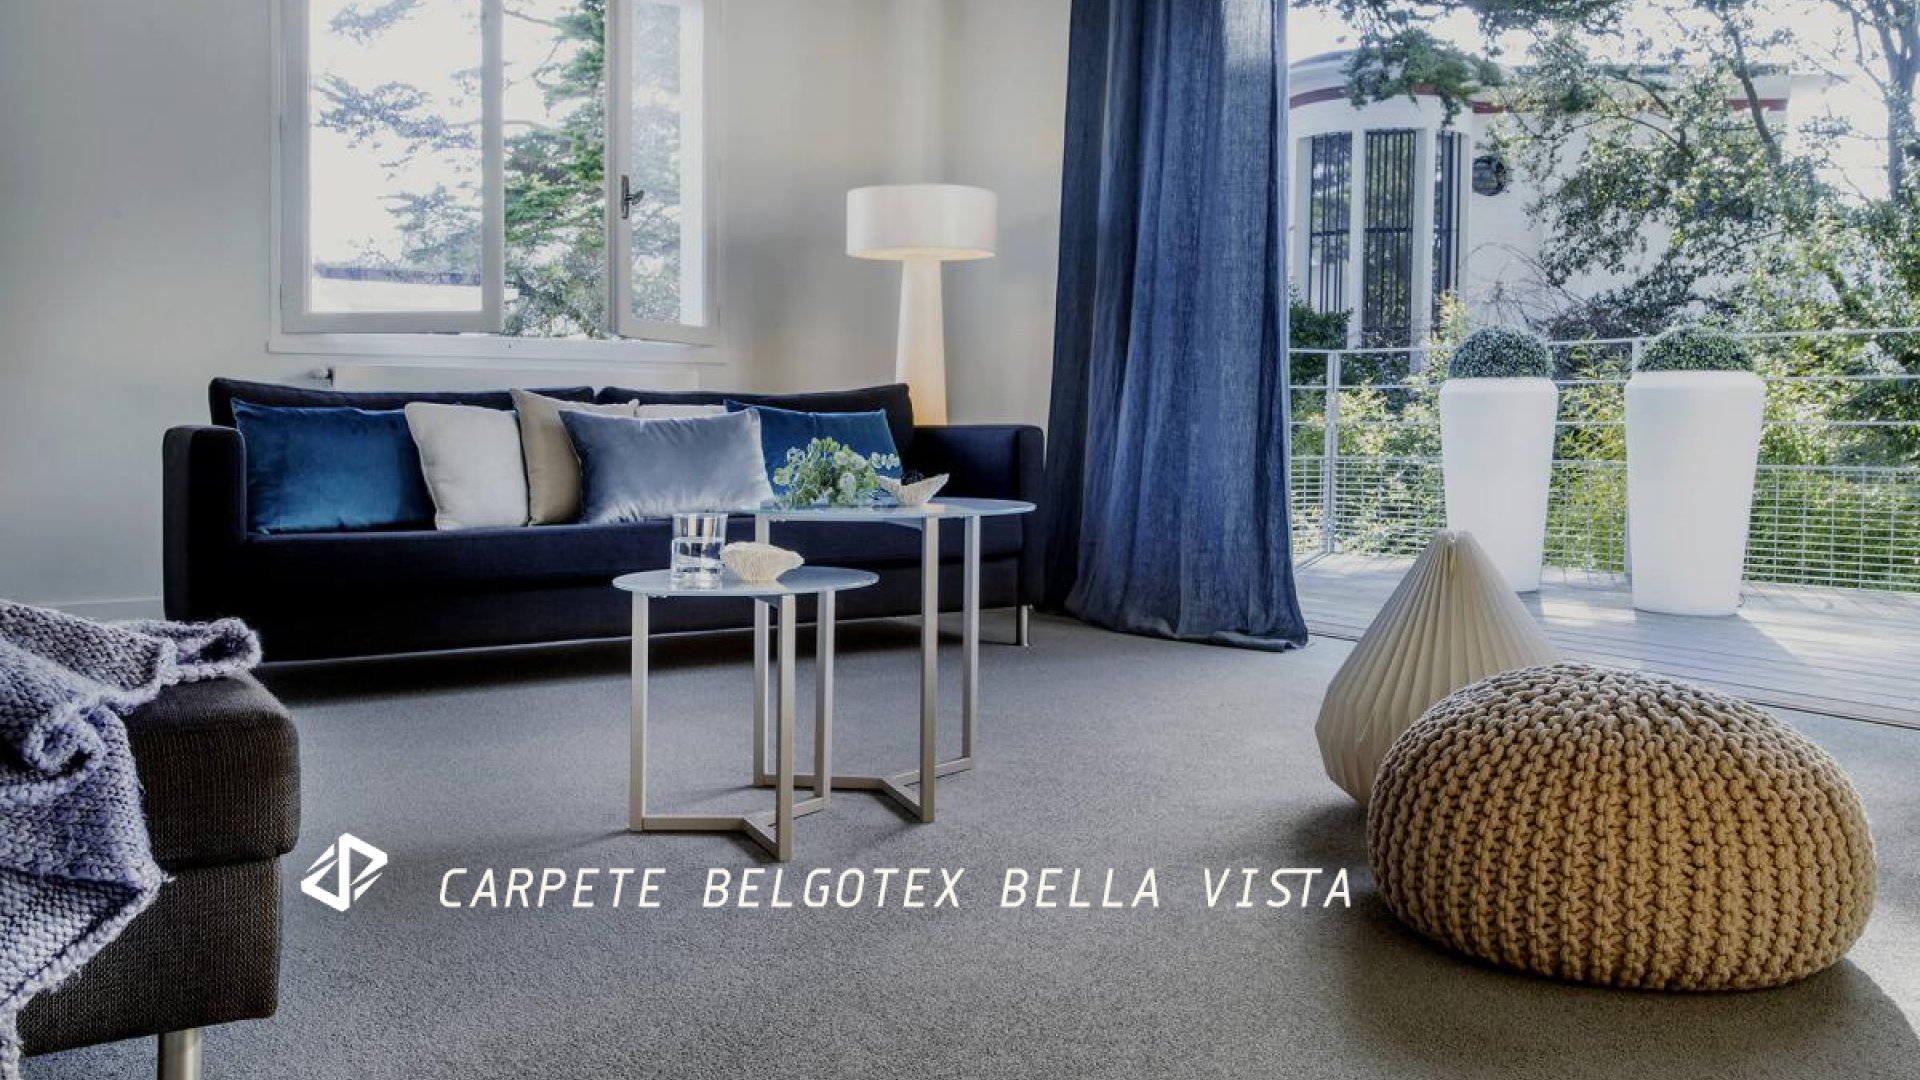 Carpete Belgotex 